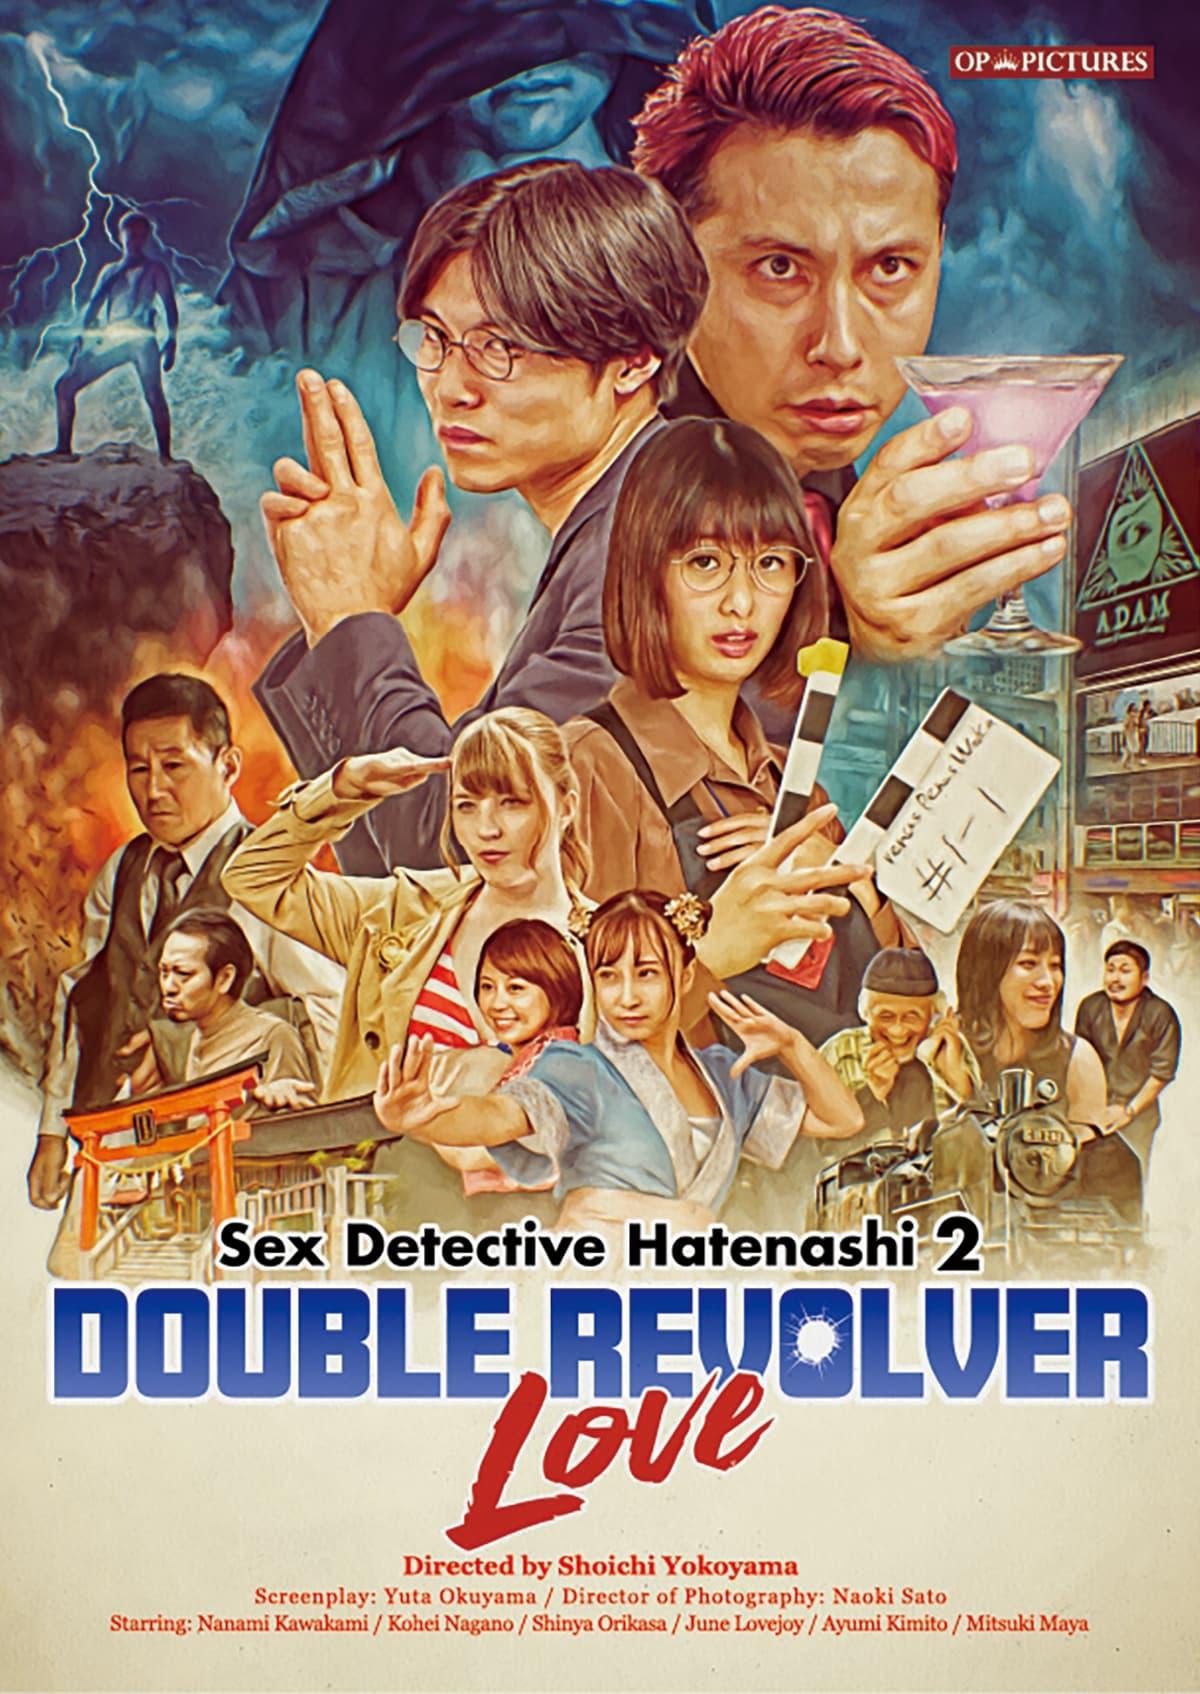 Sex Detective Hatenashi 2: Double Revolver Love poster